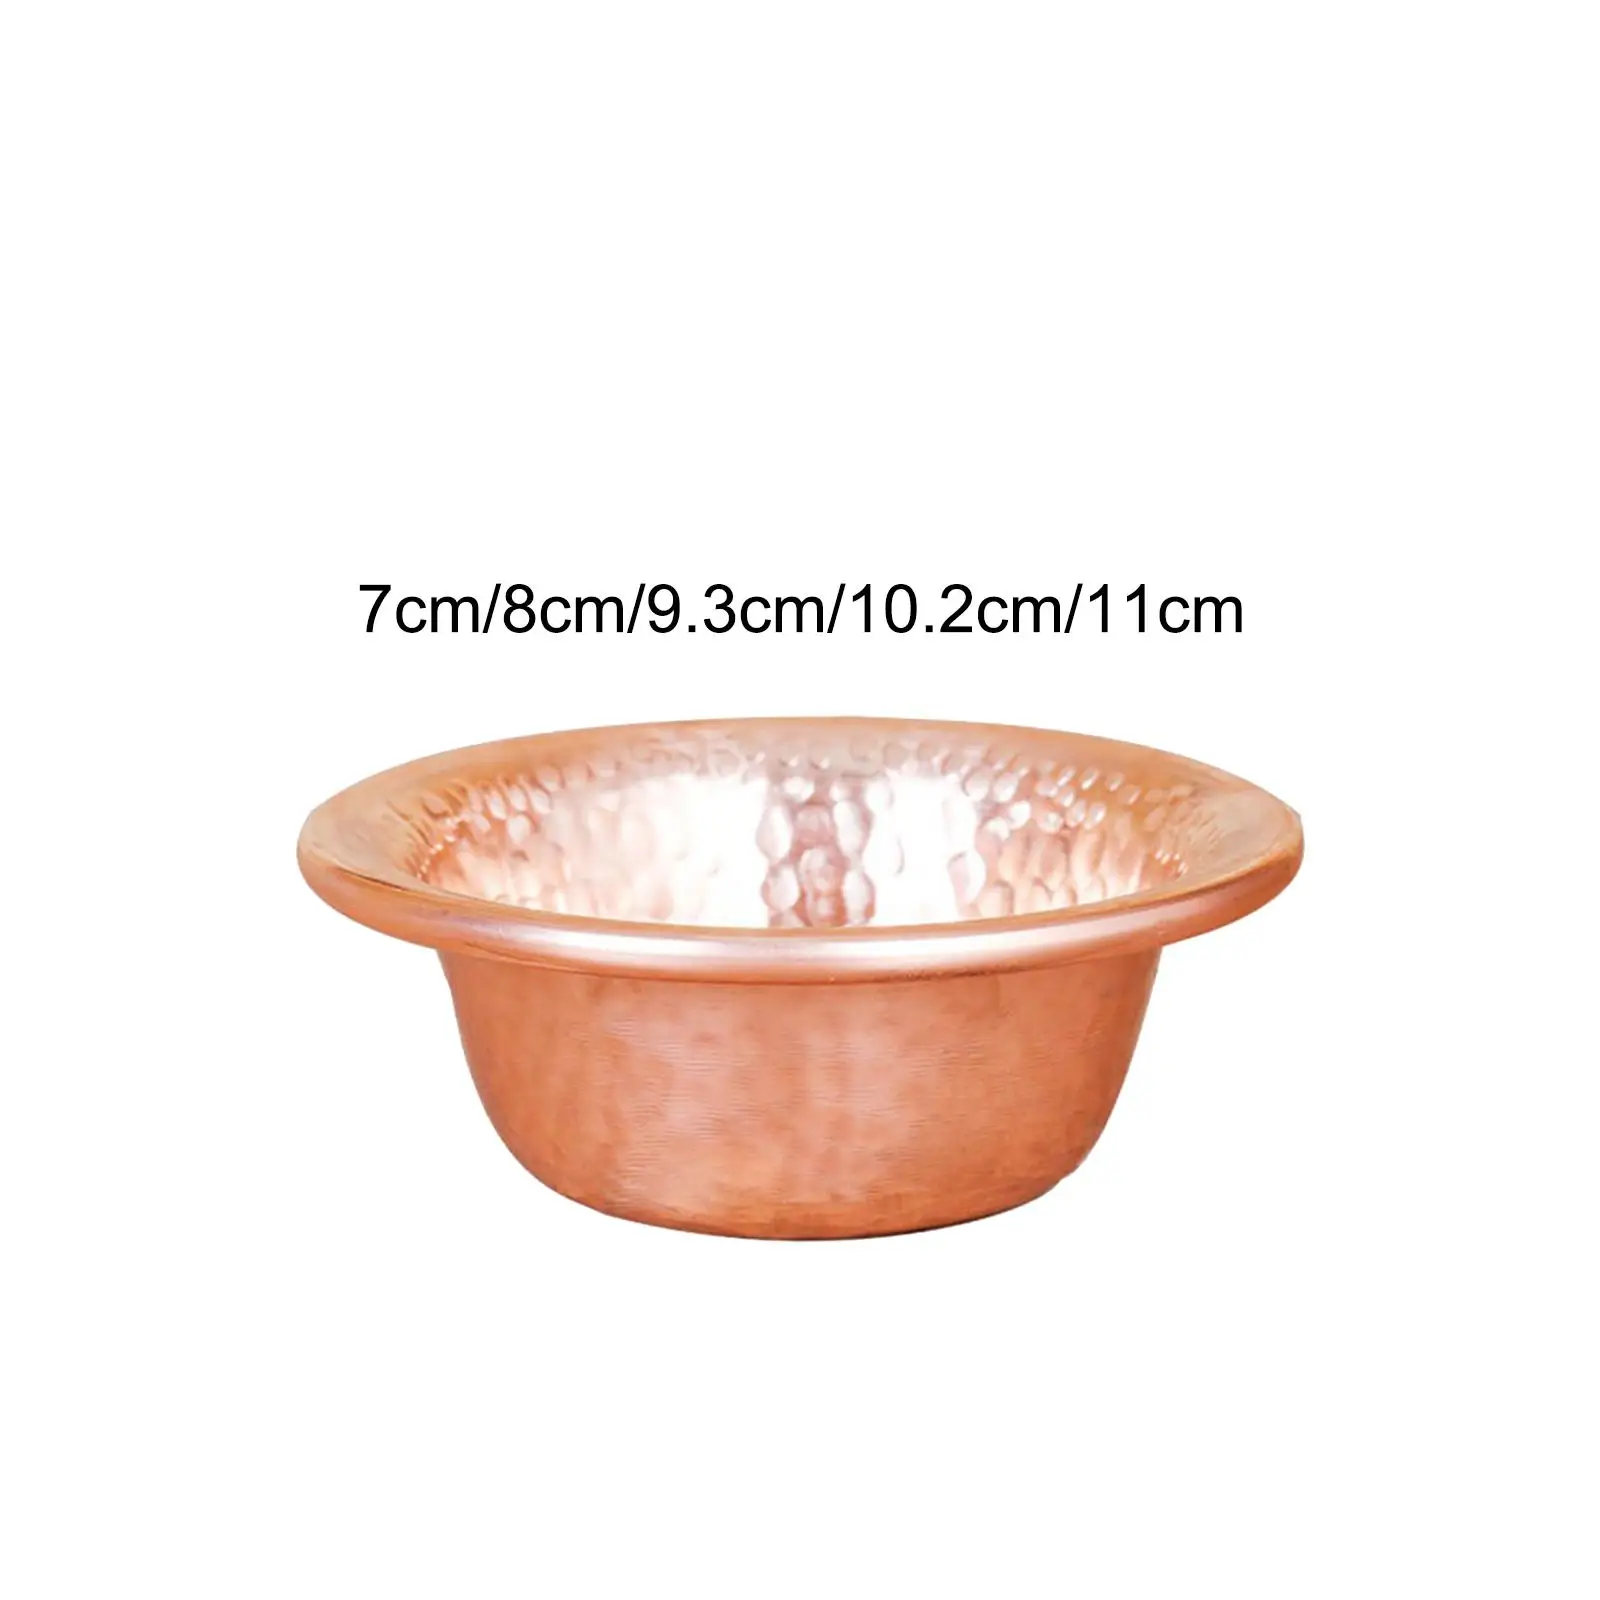 Small Copper Bowl Tribute Bowl for Rituals Sacrifices Kitchen Meditation